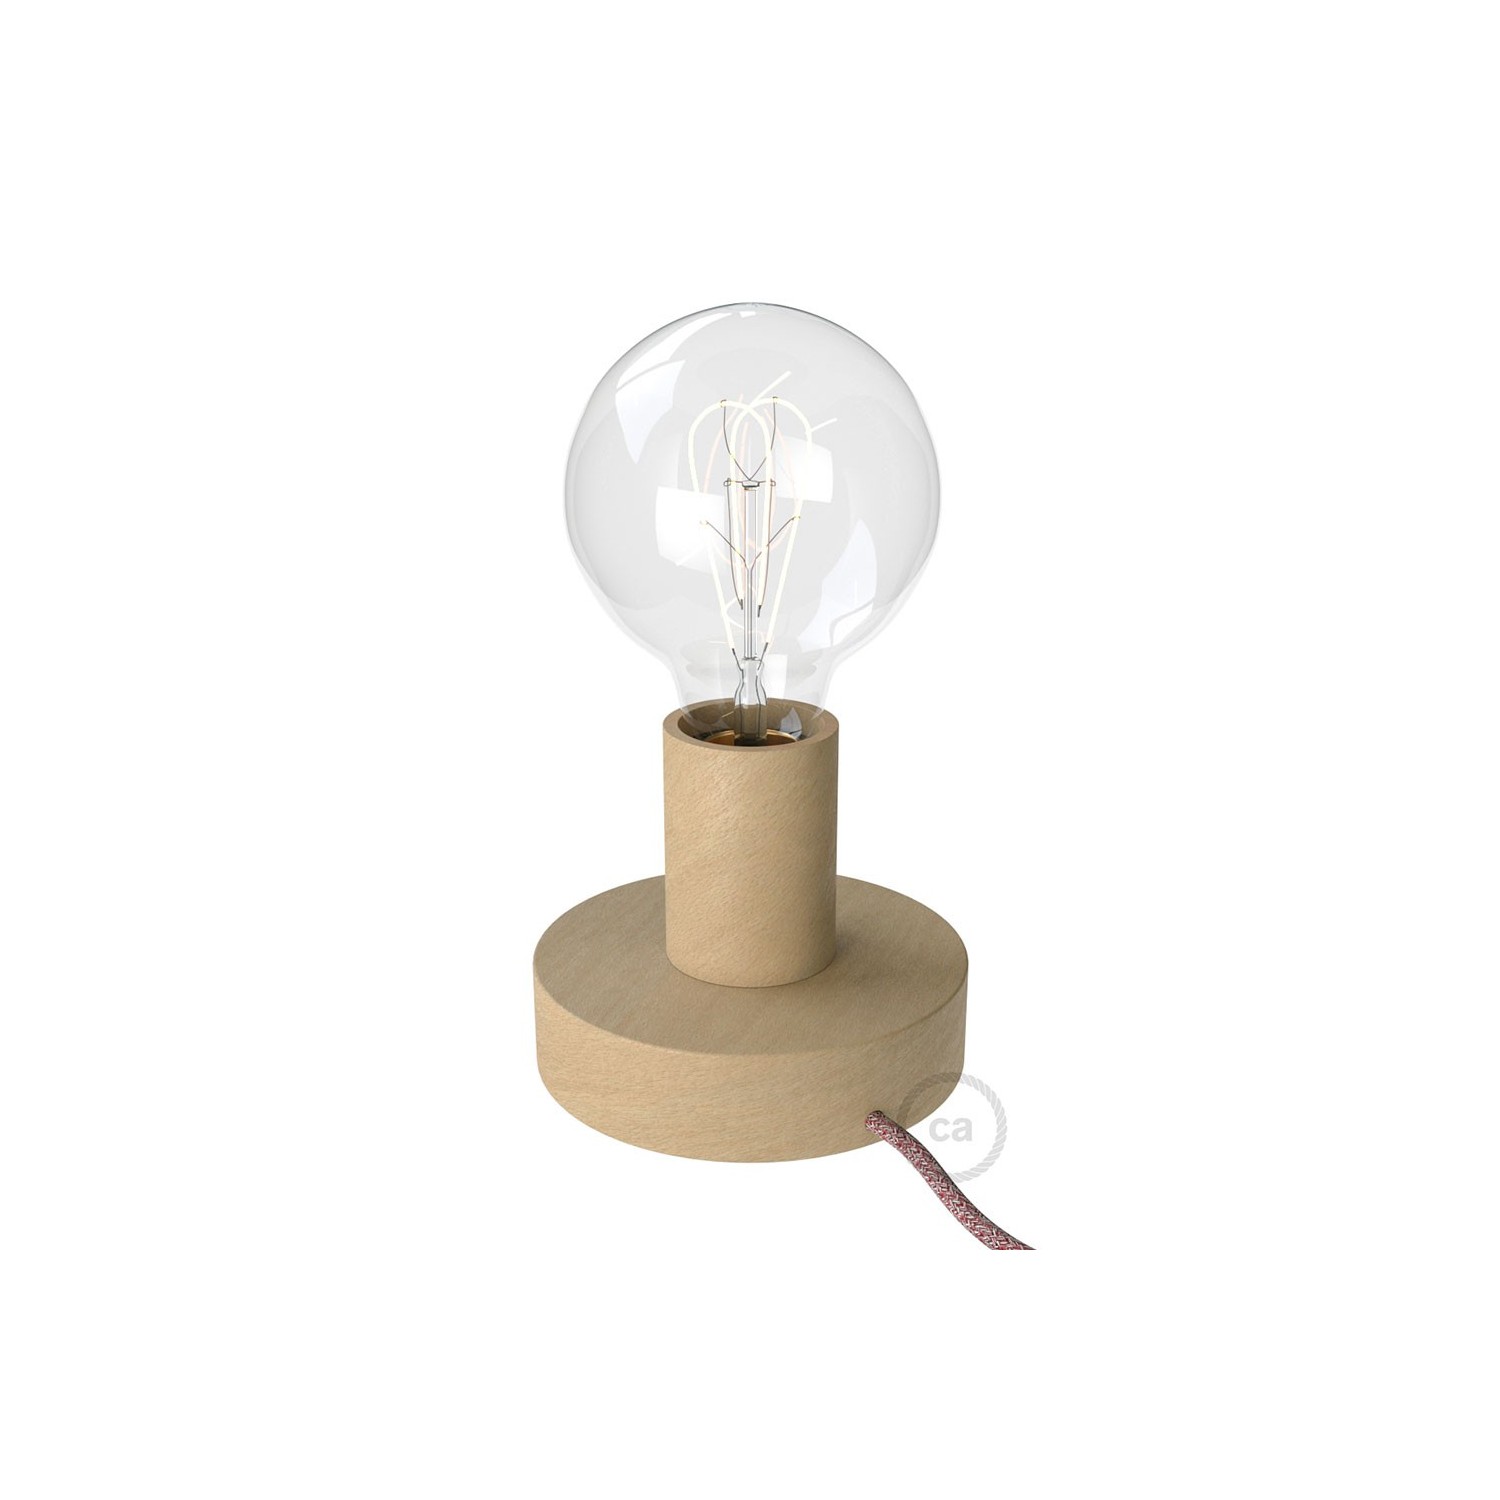 Posaluce Wood S, lámpara de mesa de madera con cable textil, interruptor y clavija